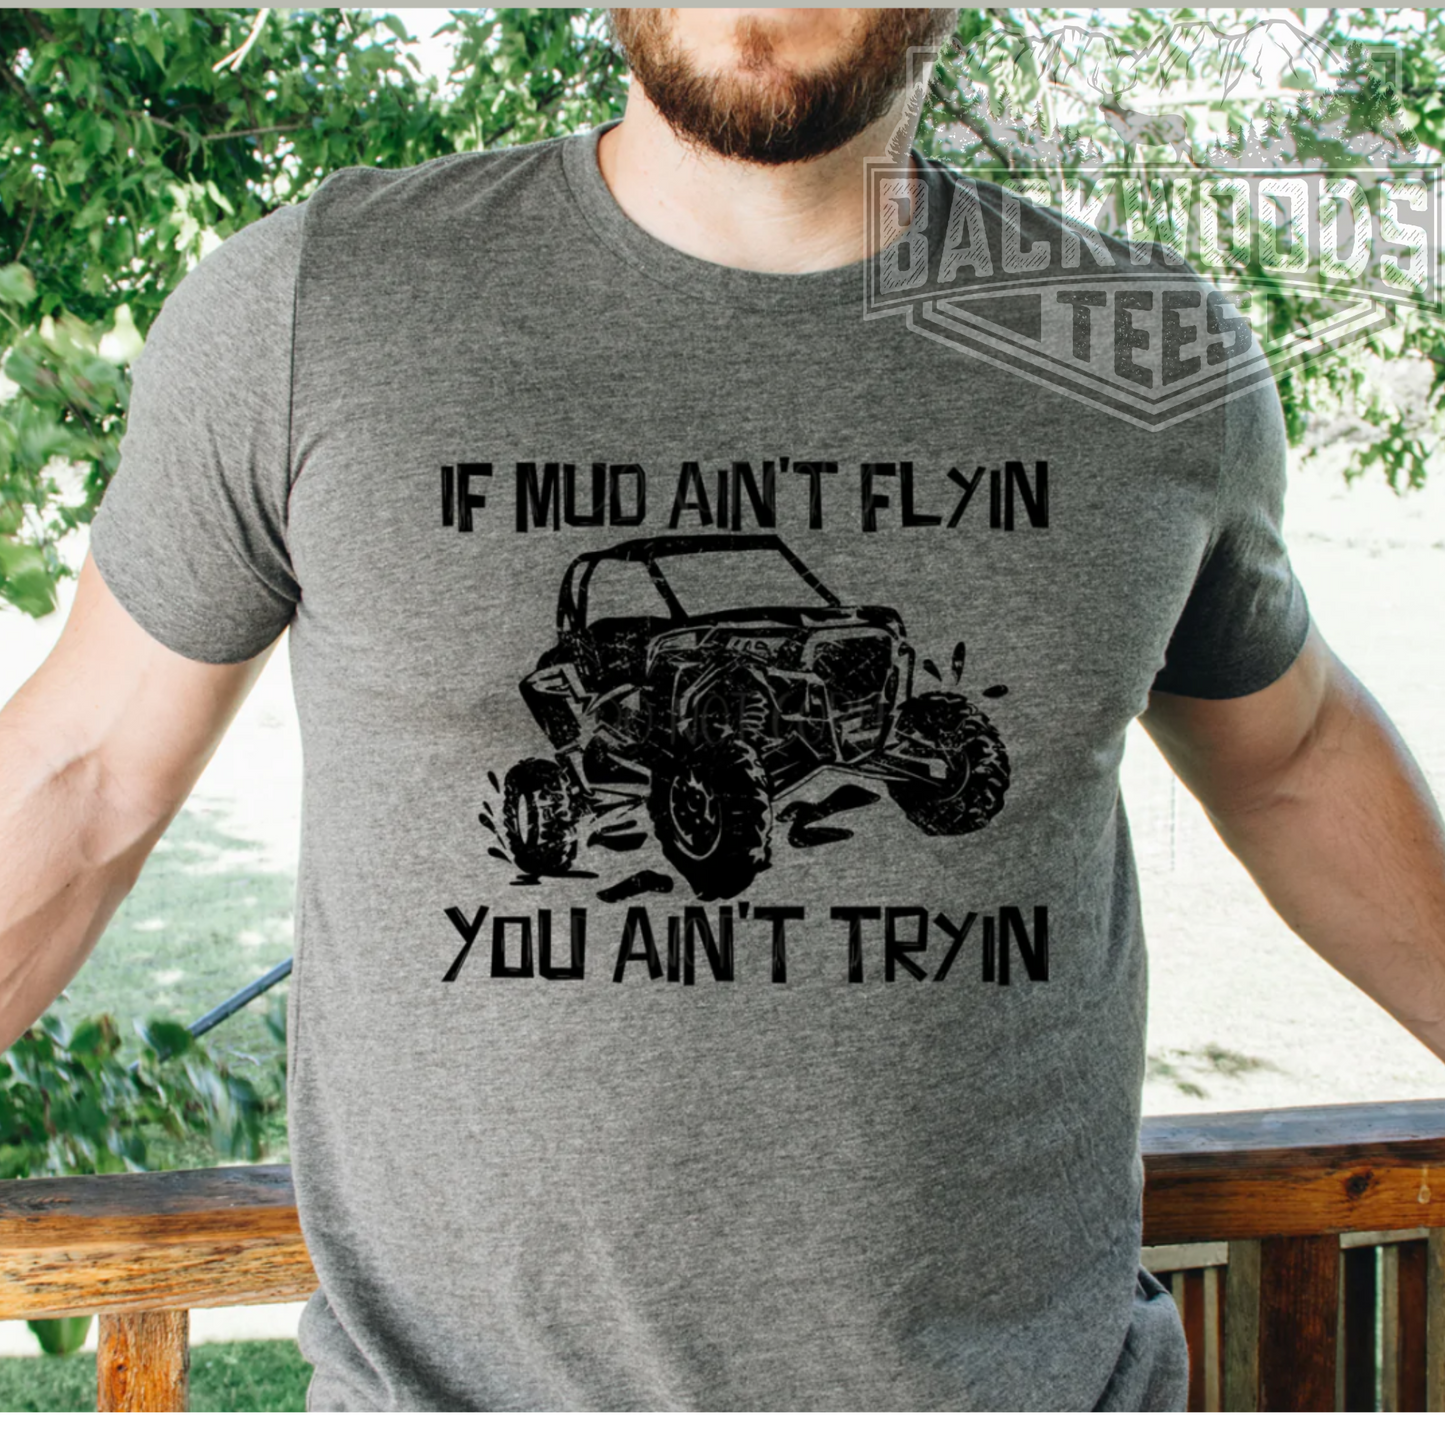 If Mud Ain't Flyin, You Ain't Tryin